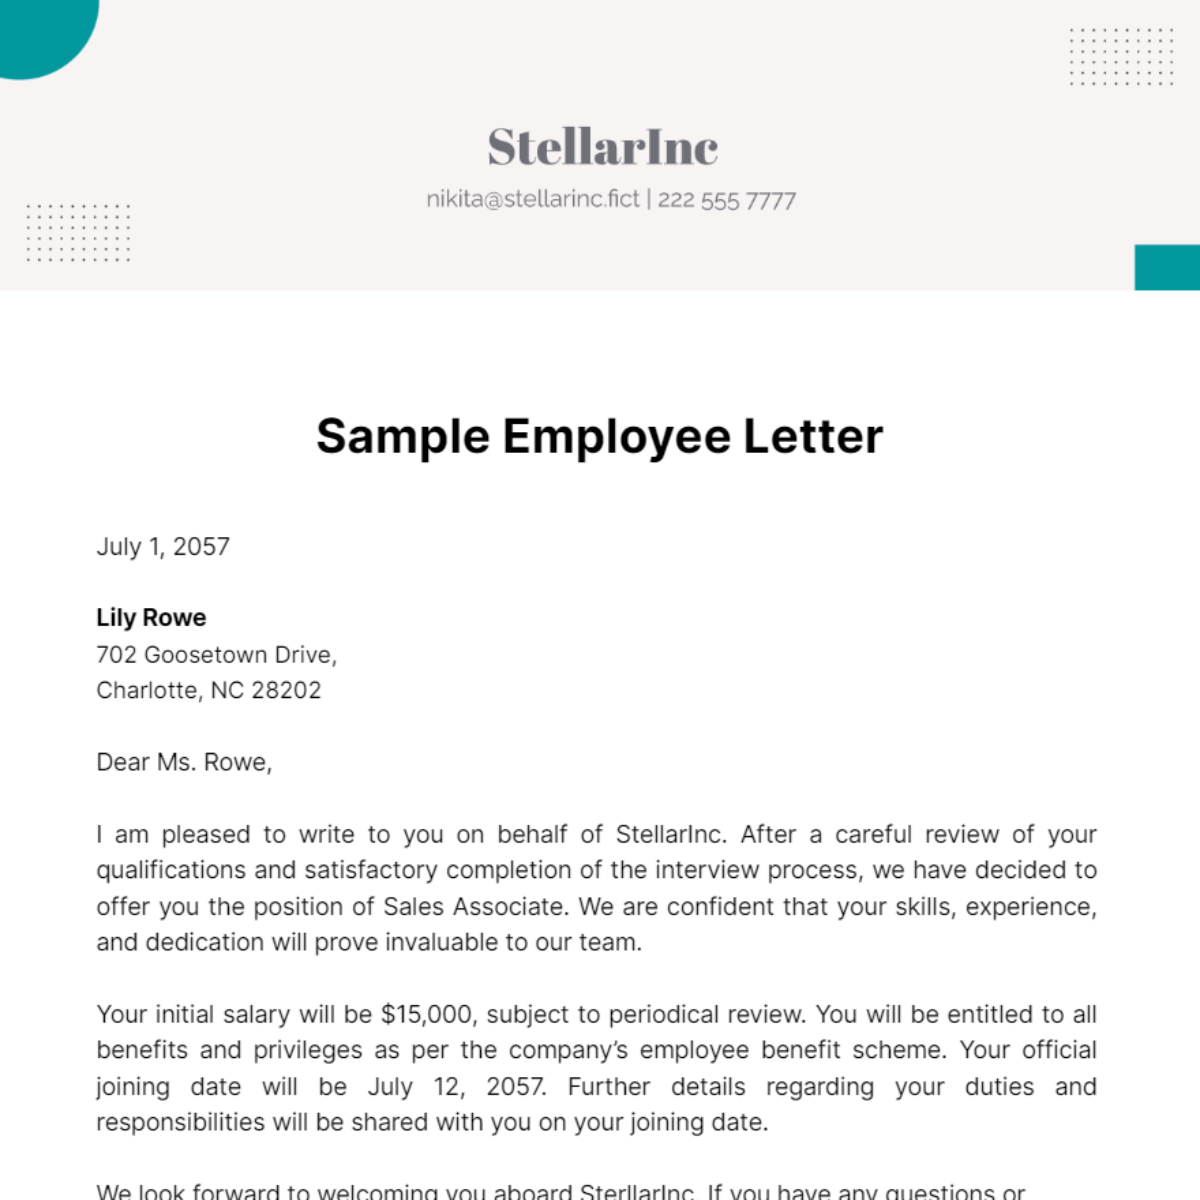 Sample Employee Letter Template